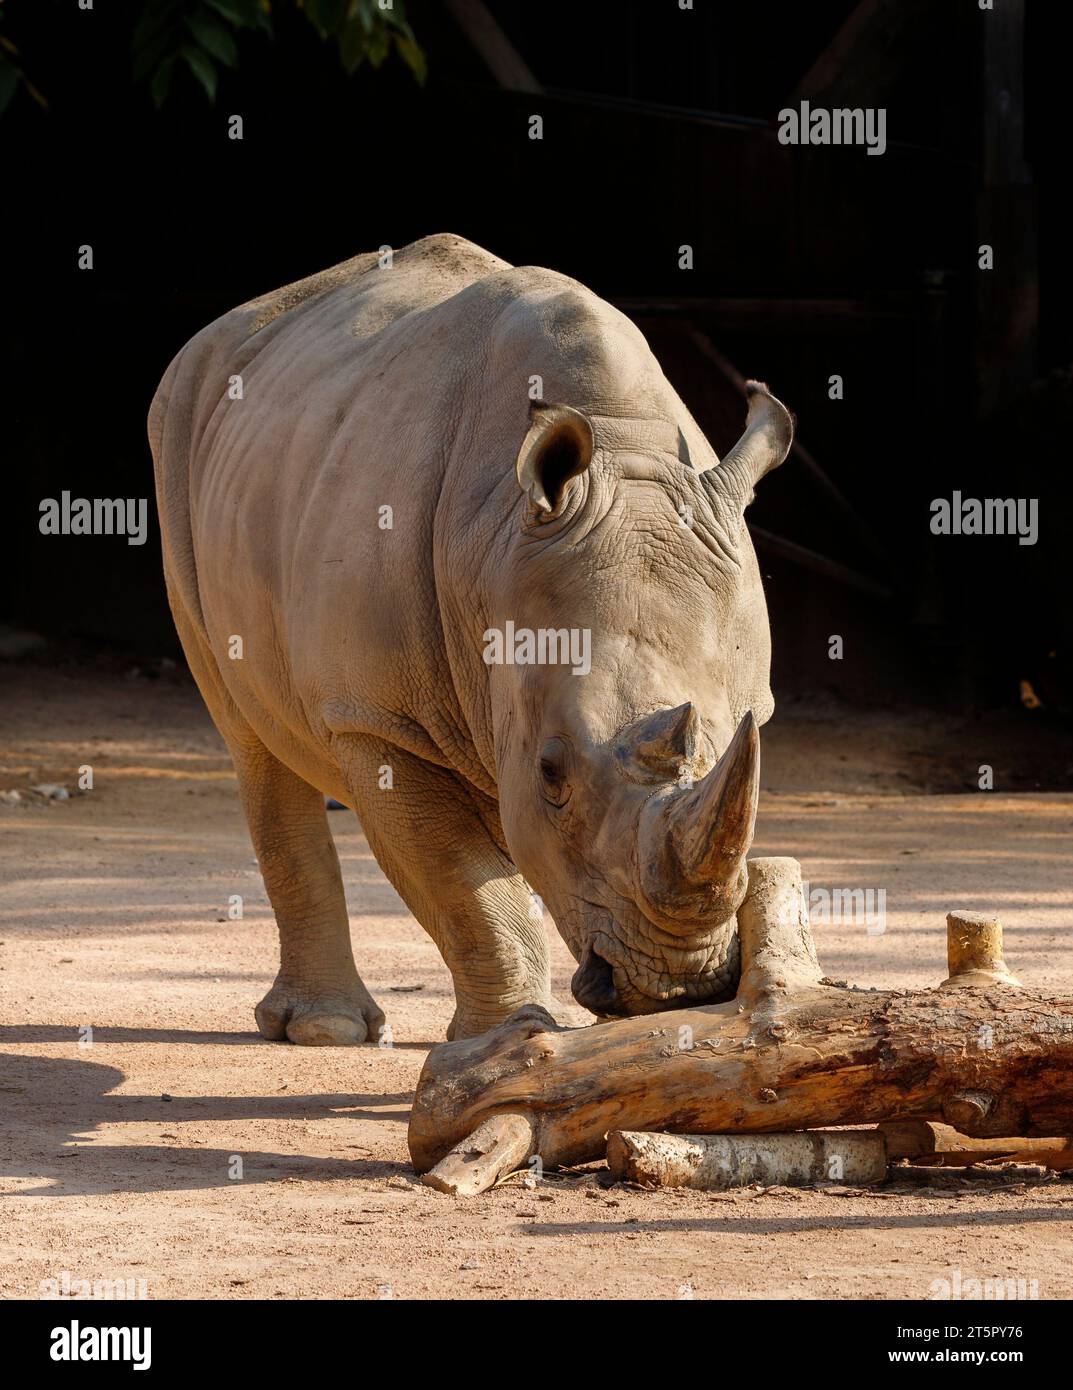 Ceratotherium simum (family: Rhinocerotidae) in a zoo. Common names: white rhinoceros, square-lipped rhinoceros. Stock Photo